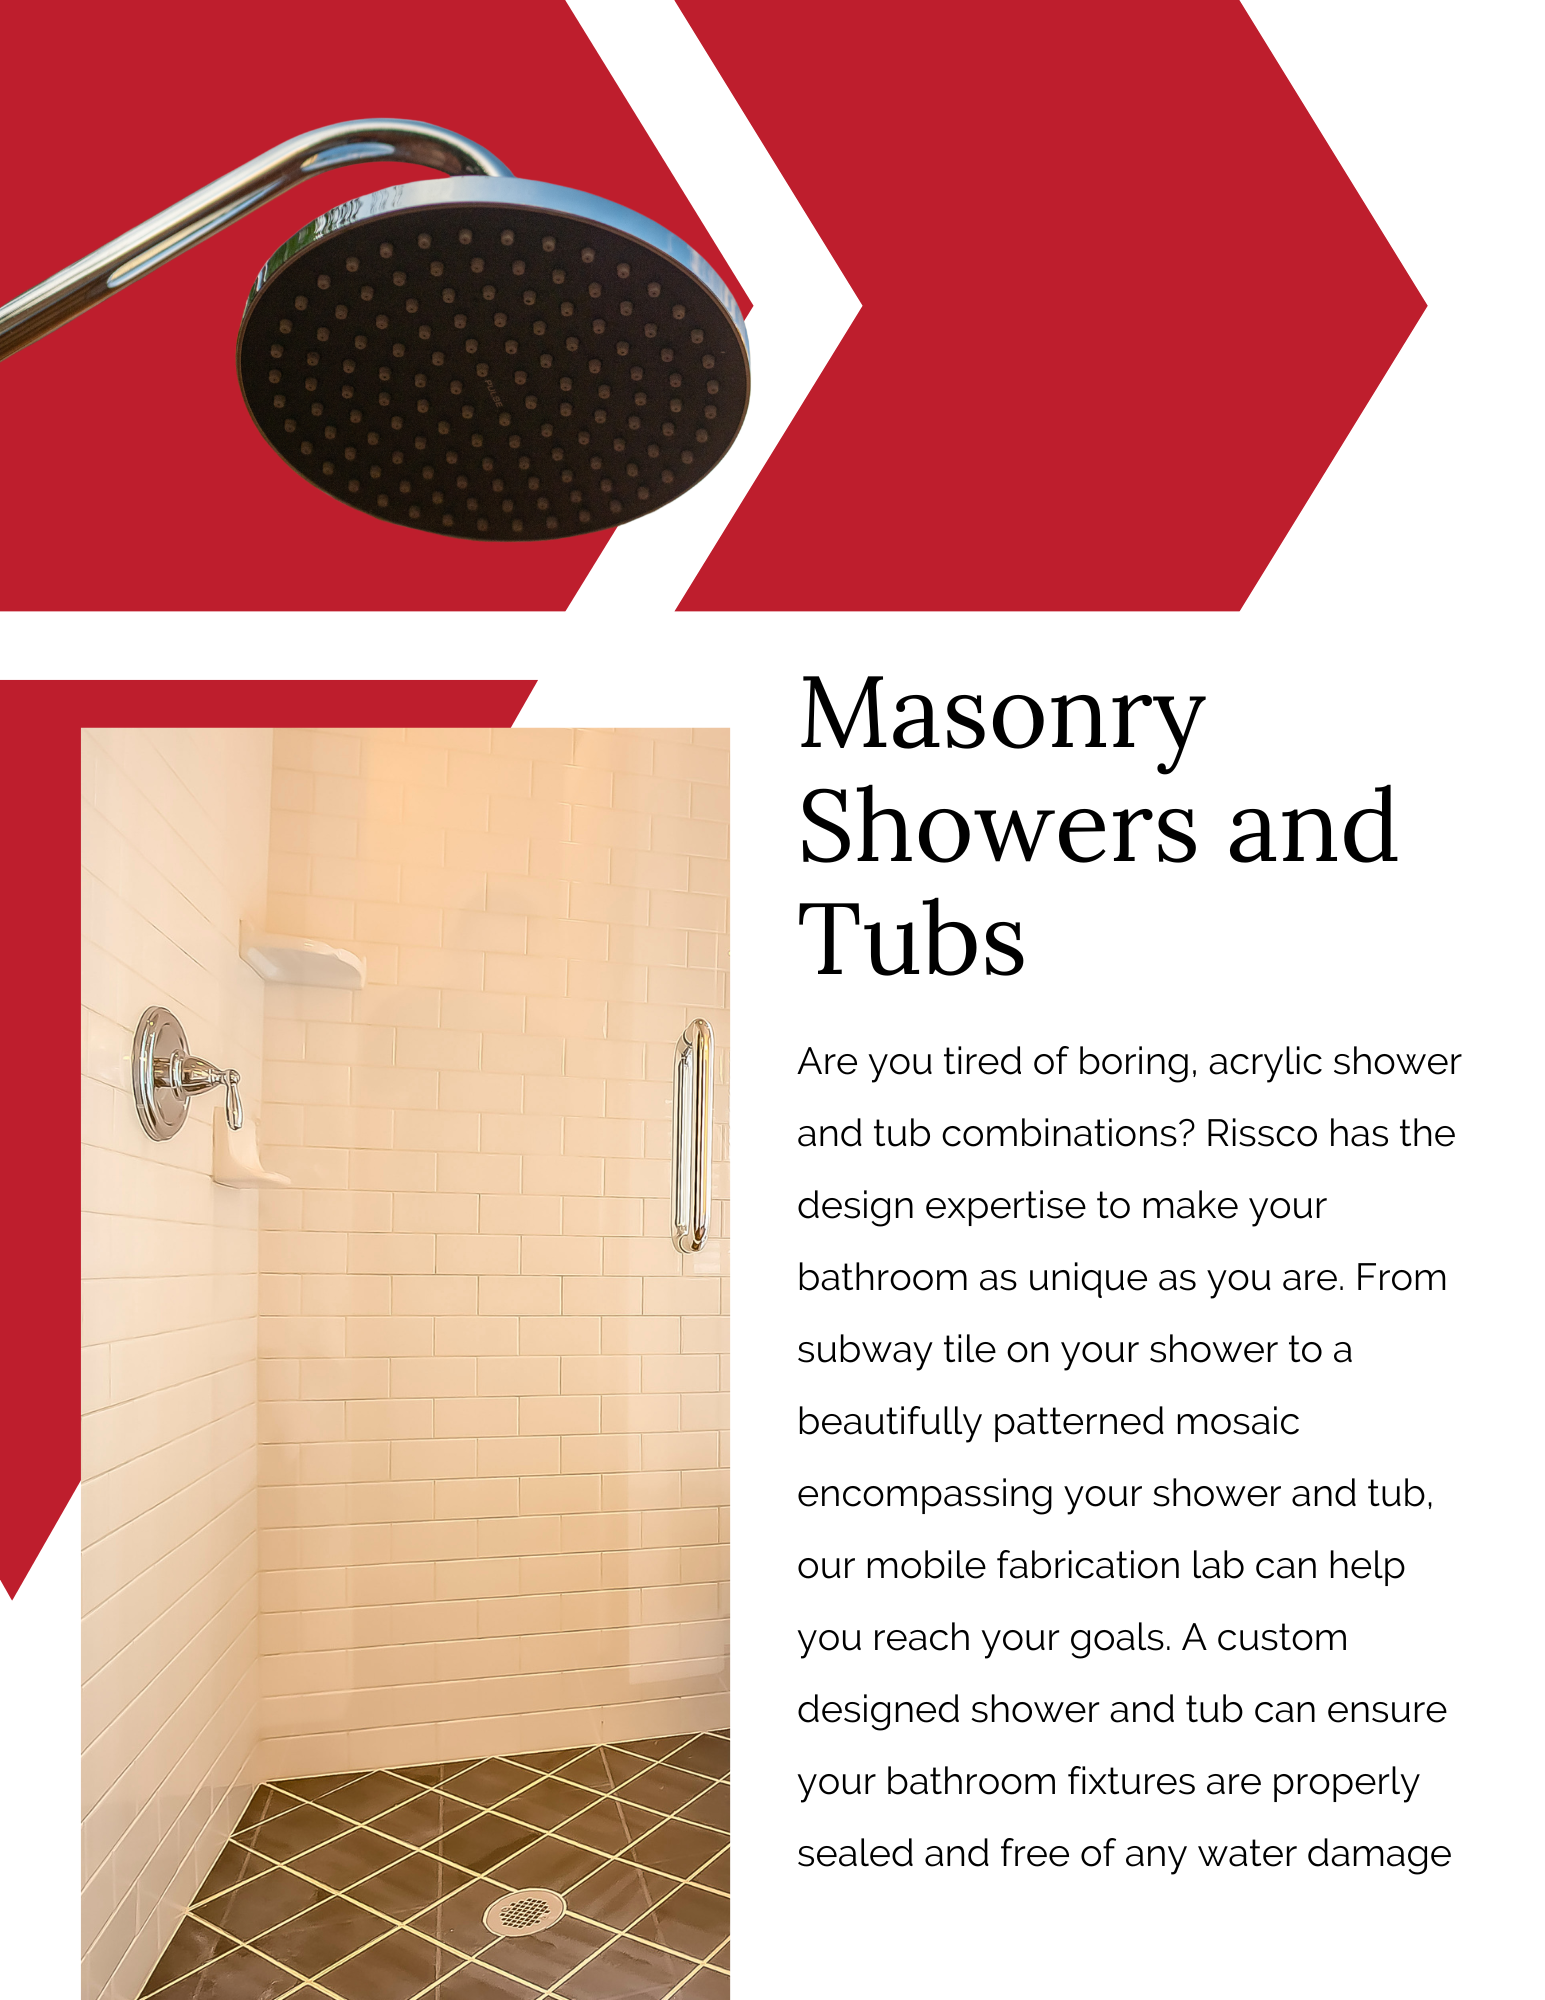 Masonry Showers and Tubs